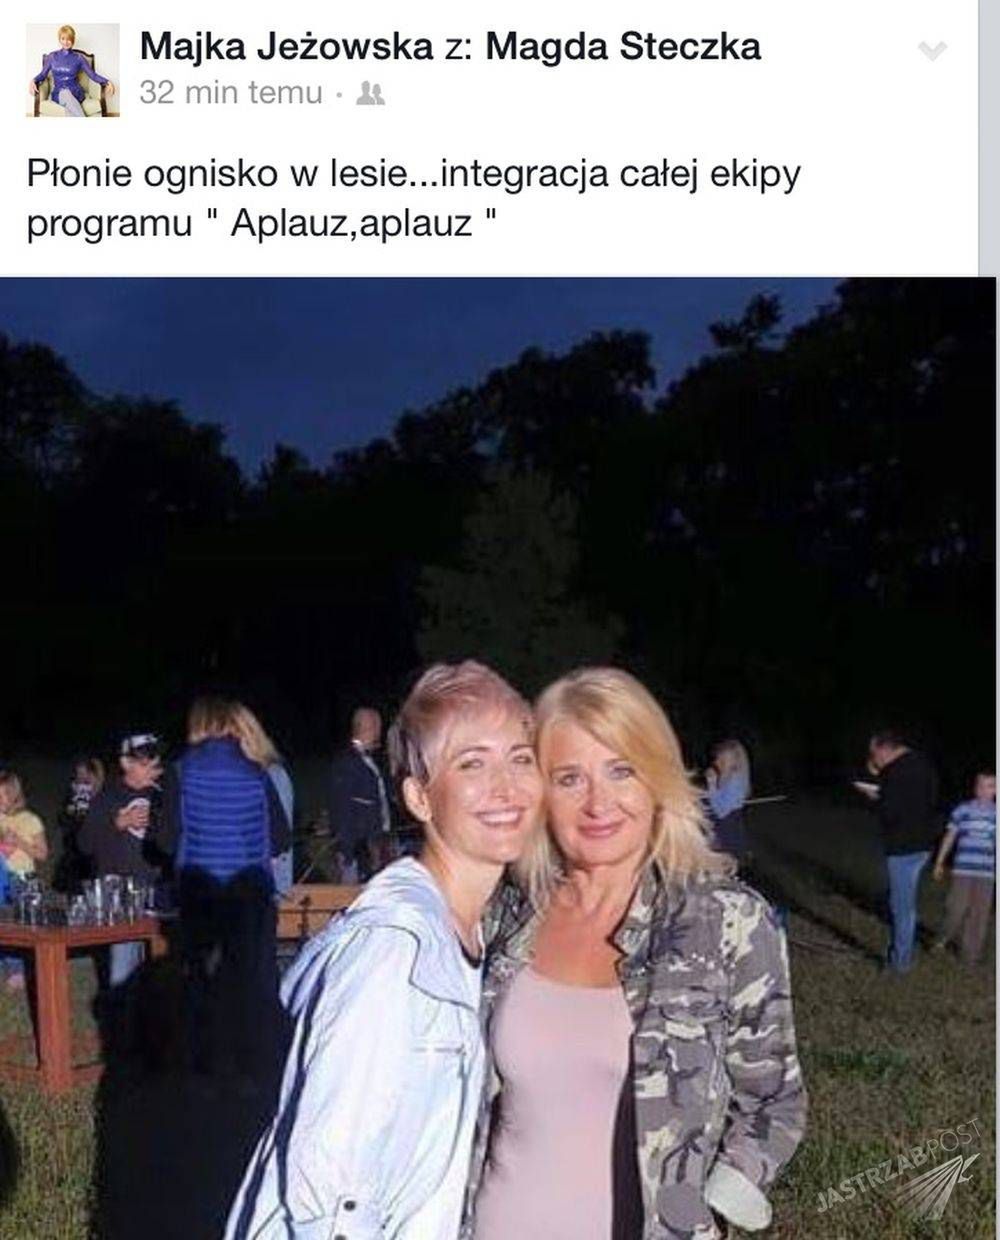 fot. screen z Facebook.pl